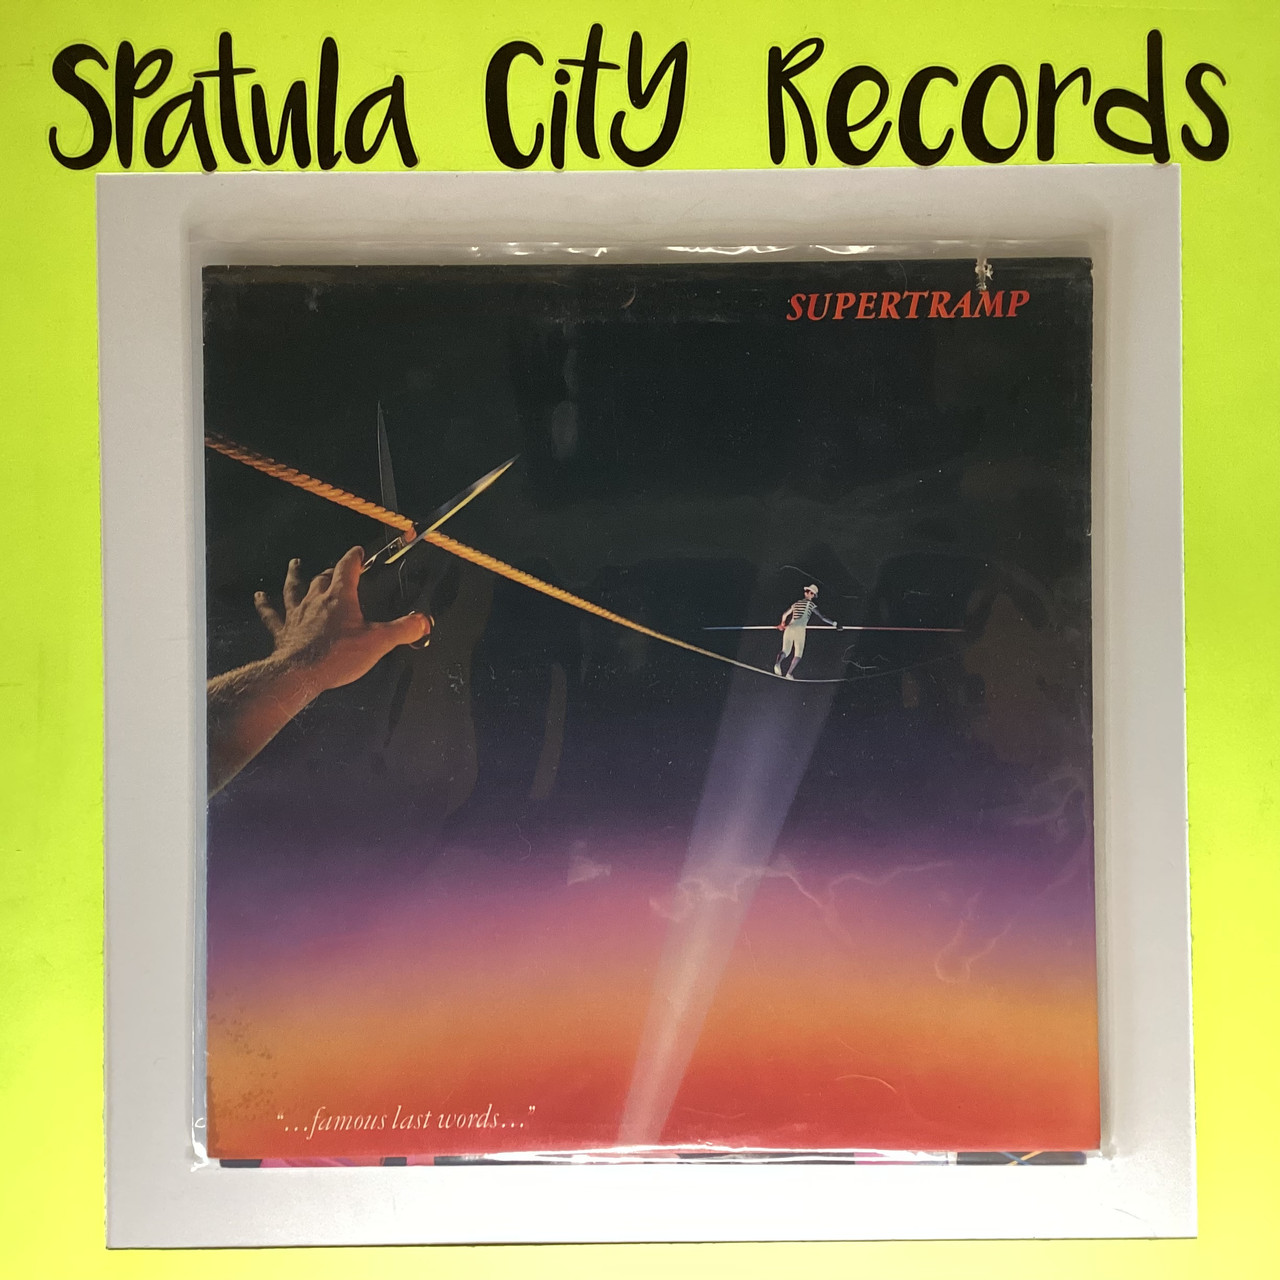 SuperTramp - Famous Last Words  - vinyl record album LP